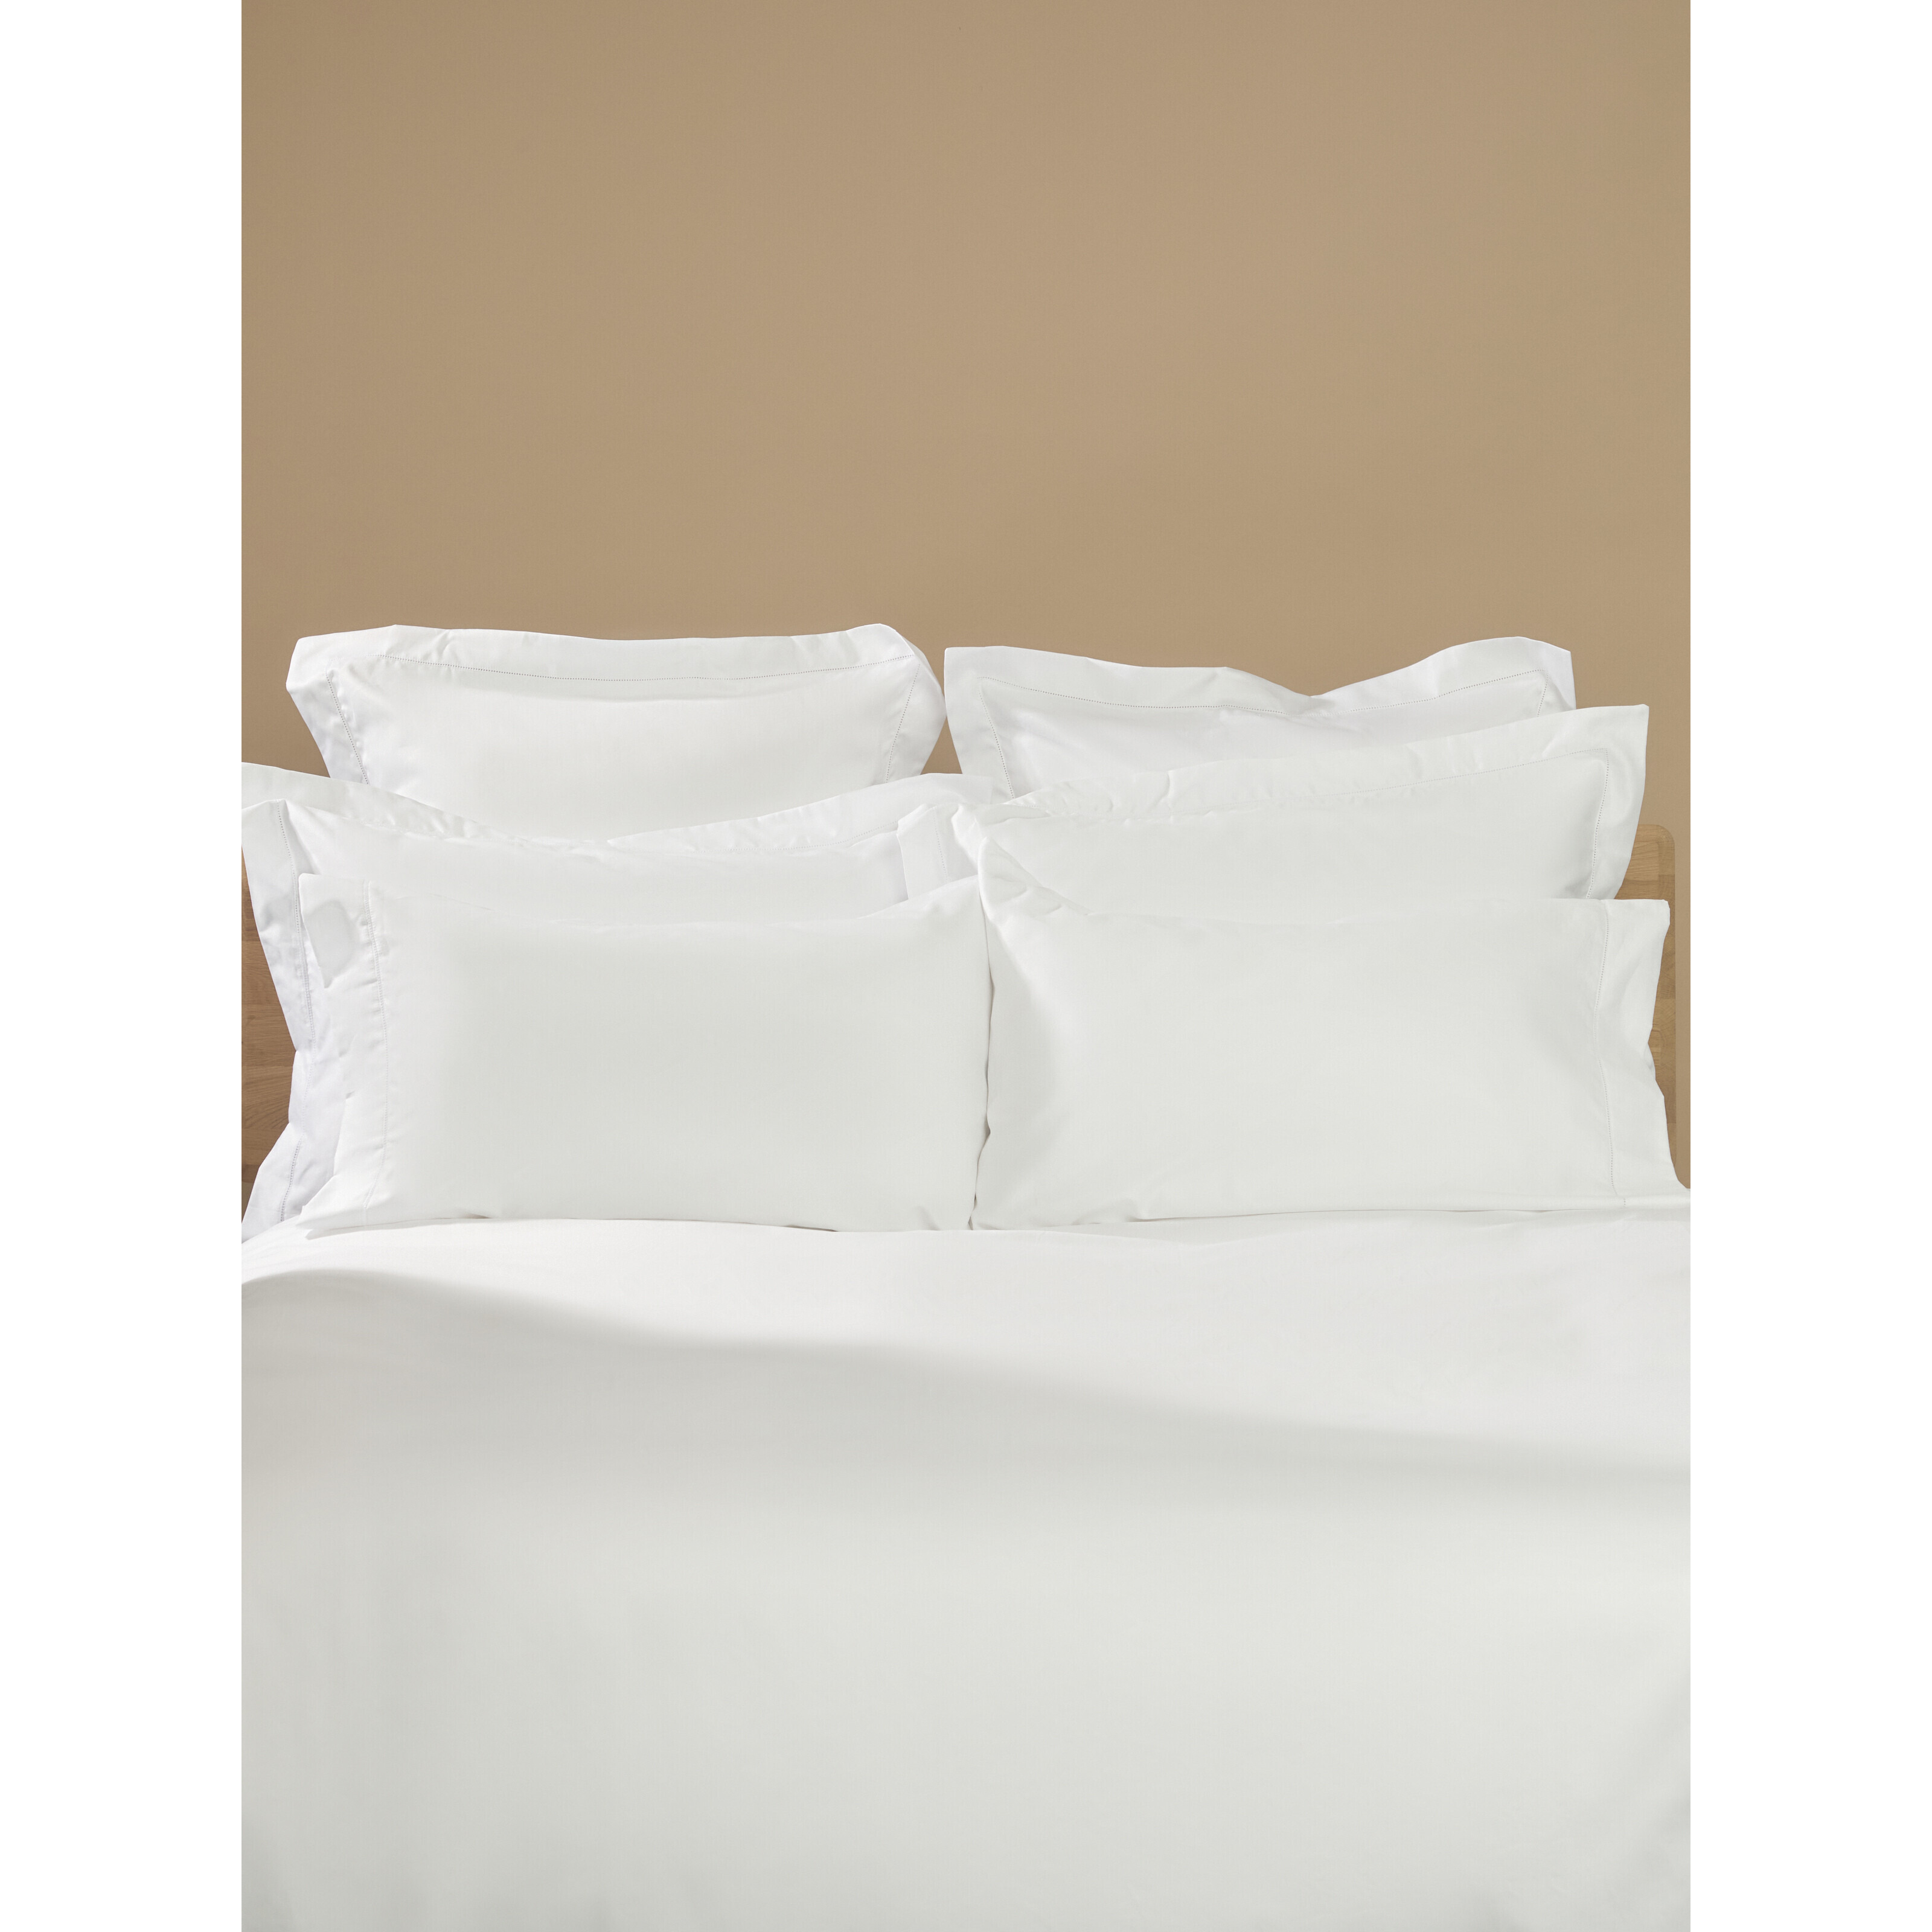 Fenwick at Home Mayfair Ultimate Egyptian Cotton Sateen Standard Pillowcase 50 x 75 cm White - image 1